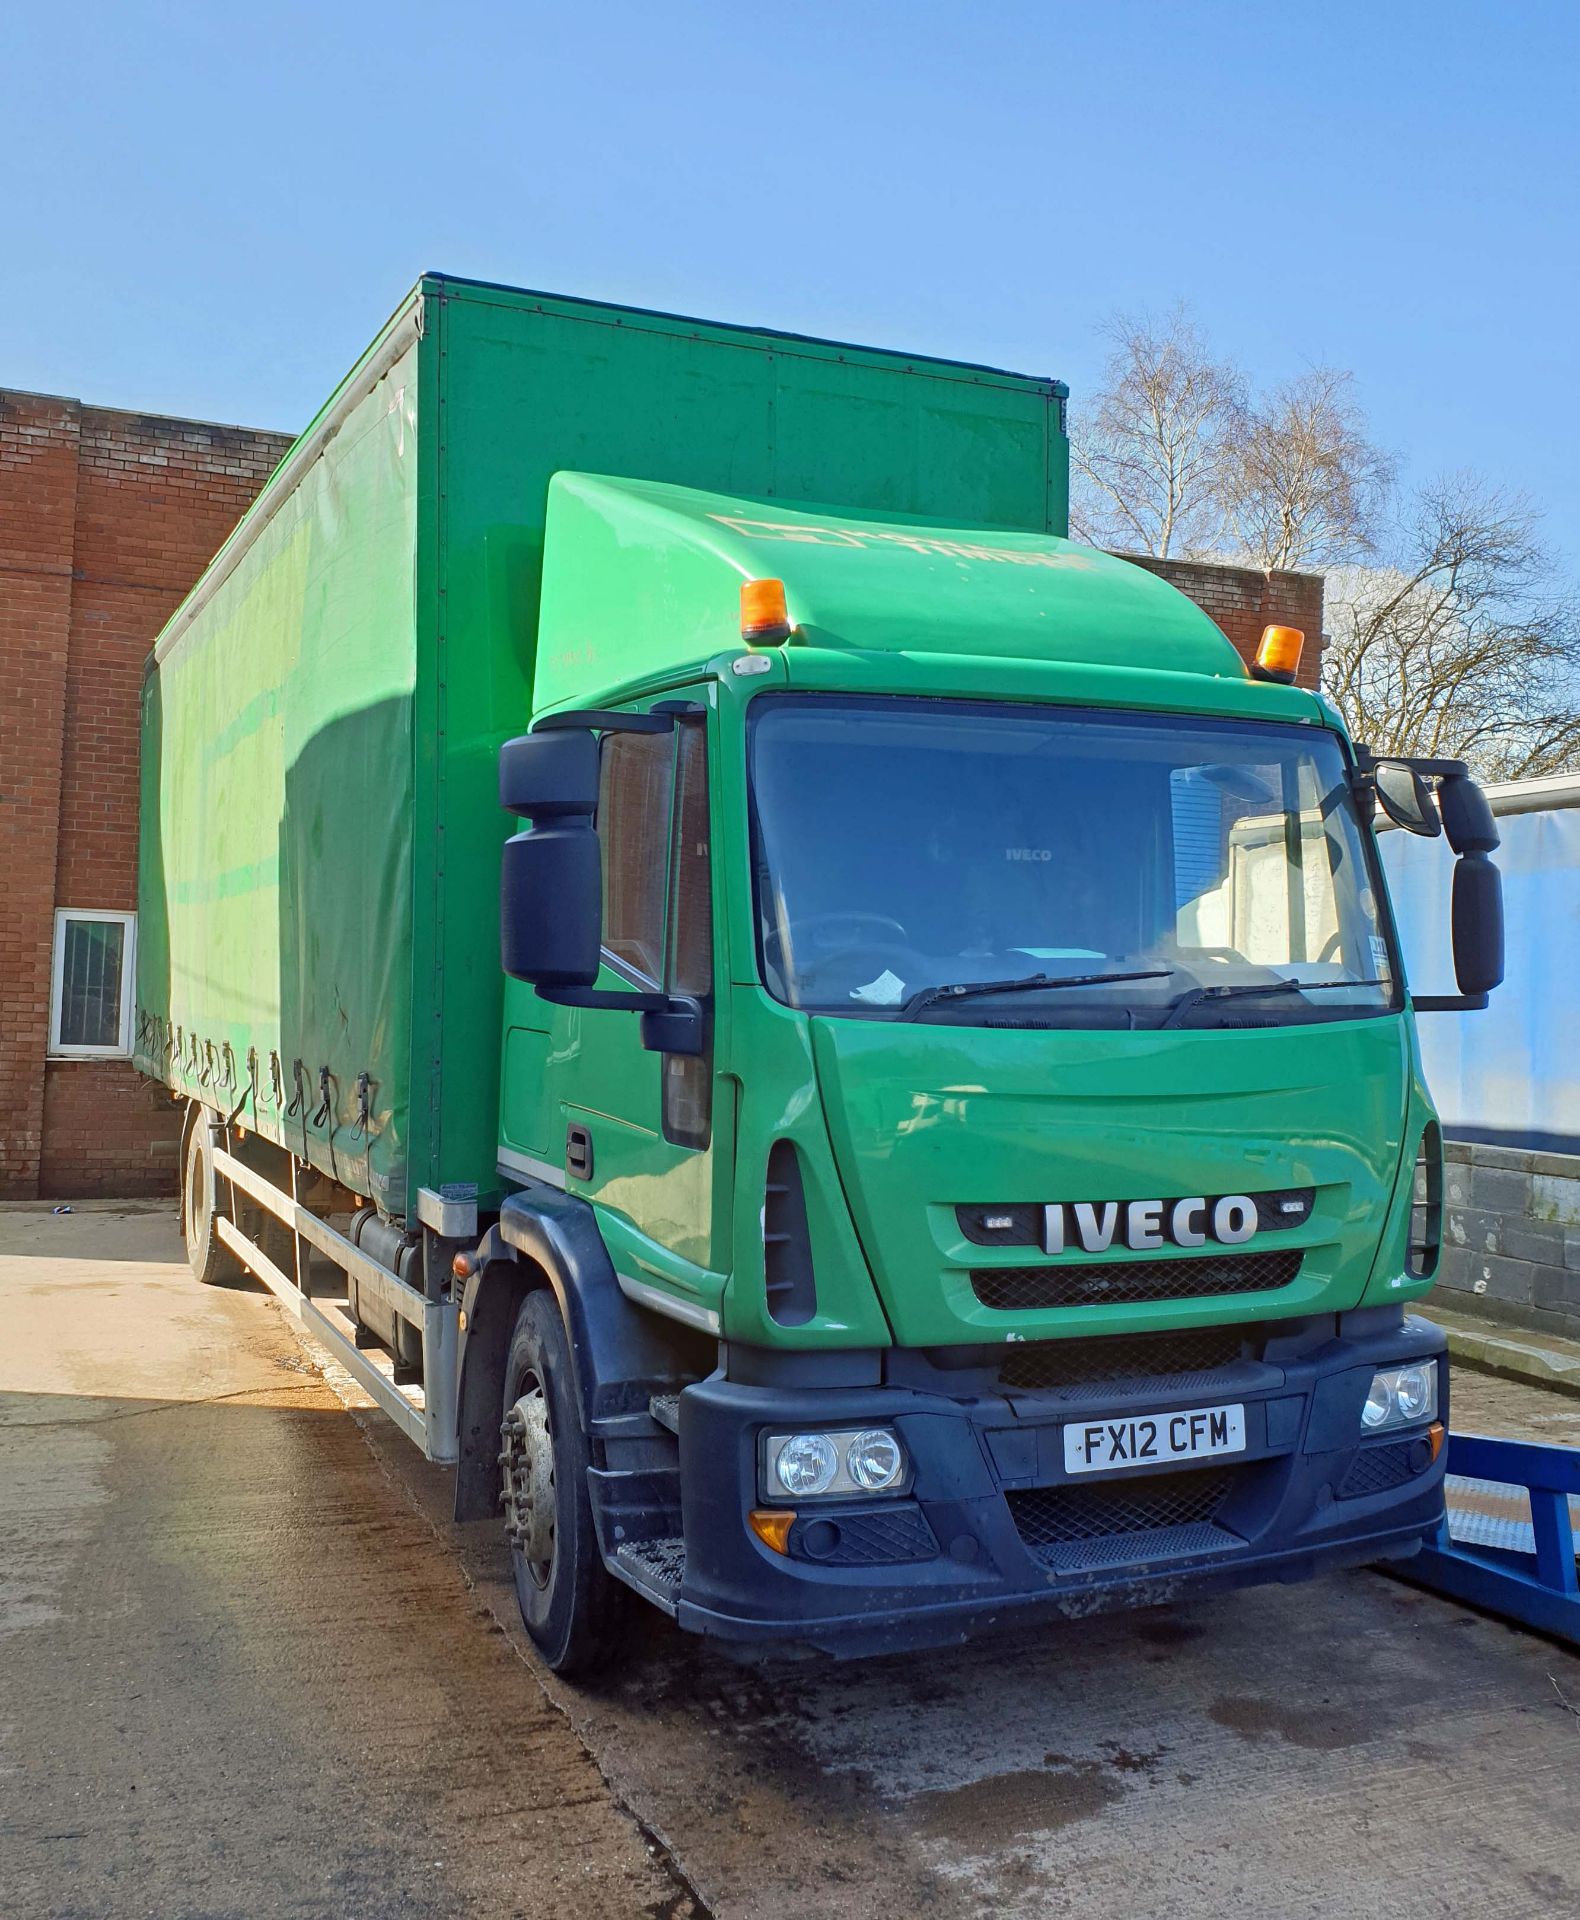 An IVECO Eurocargo ML180E25 5880cc Euro5 18-Tonne 4x2 Curtainside Truck, Registration No. FX12